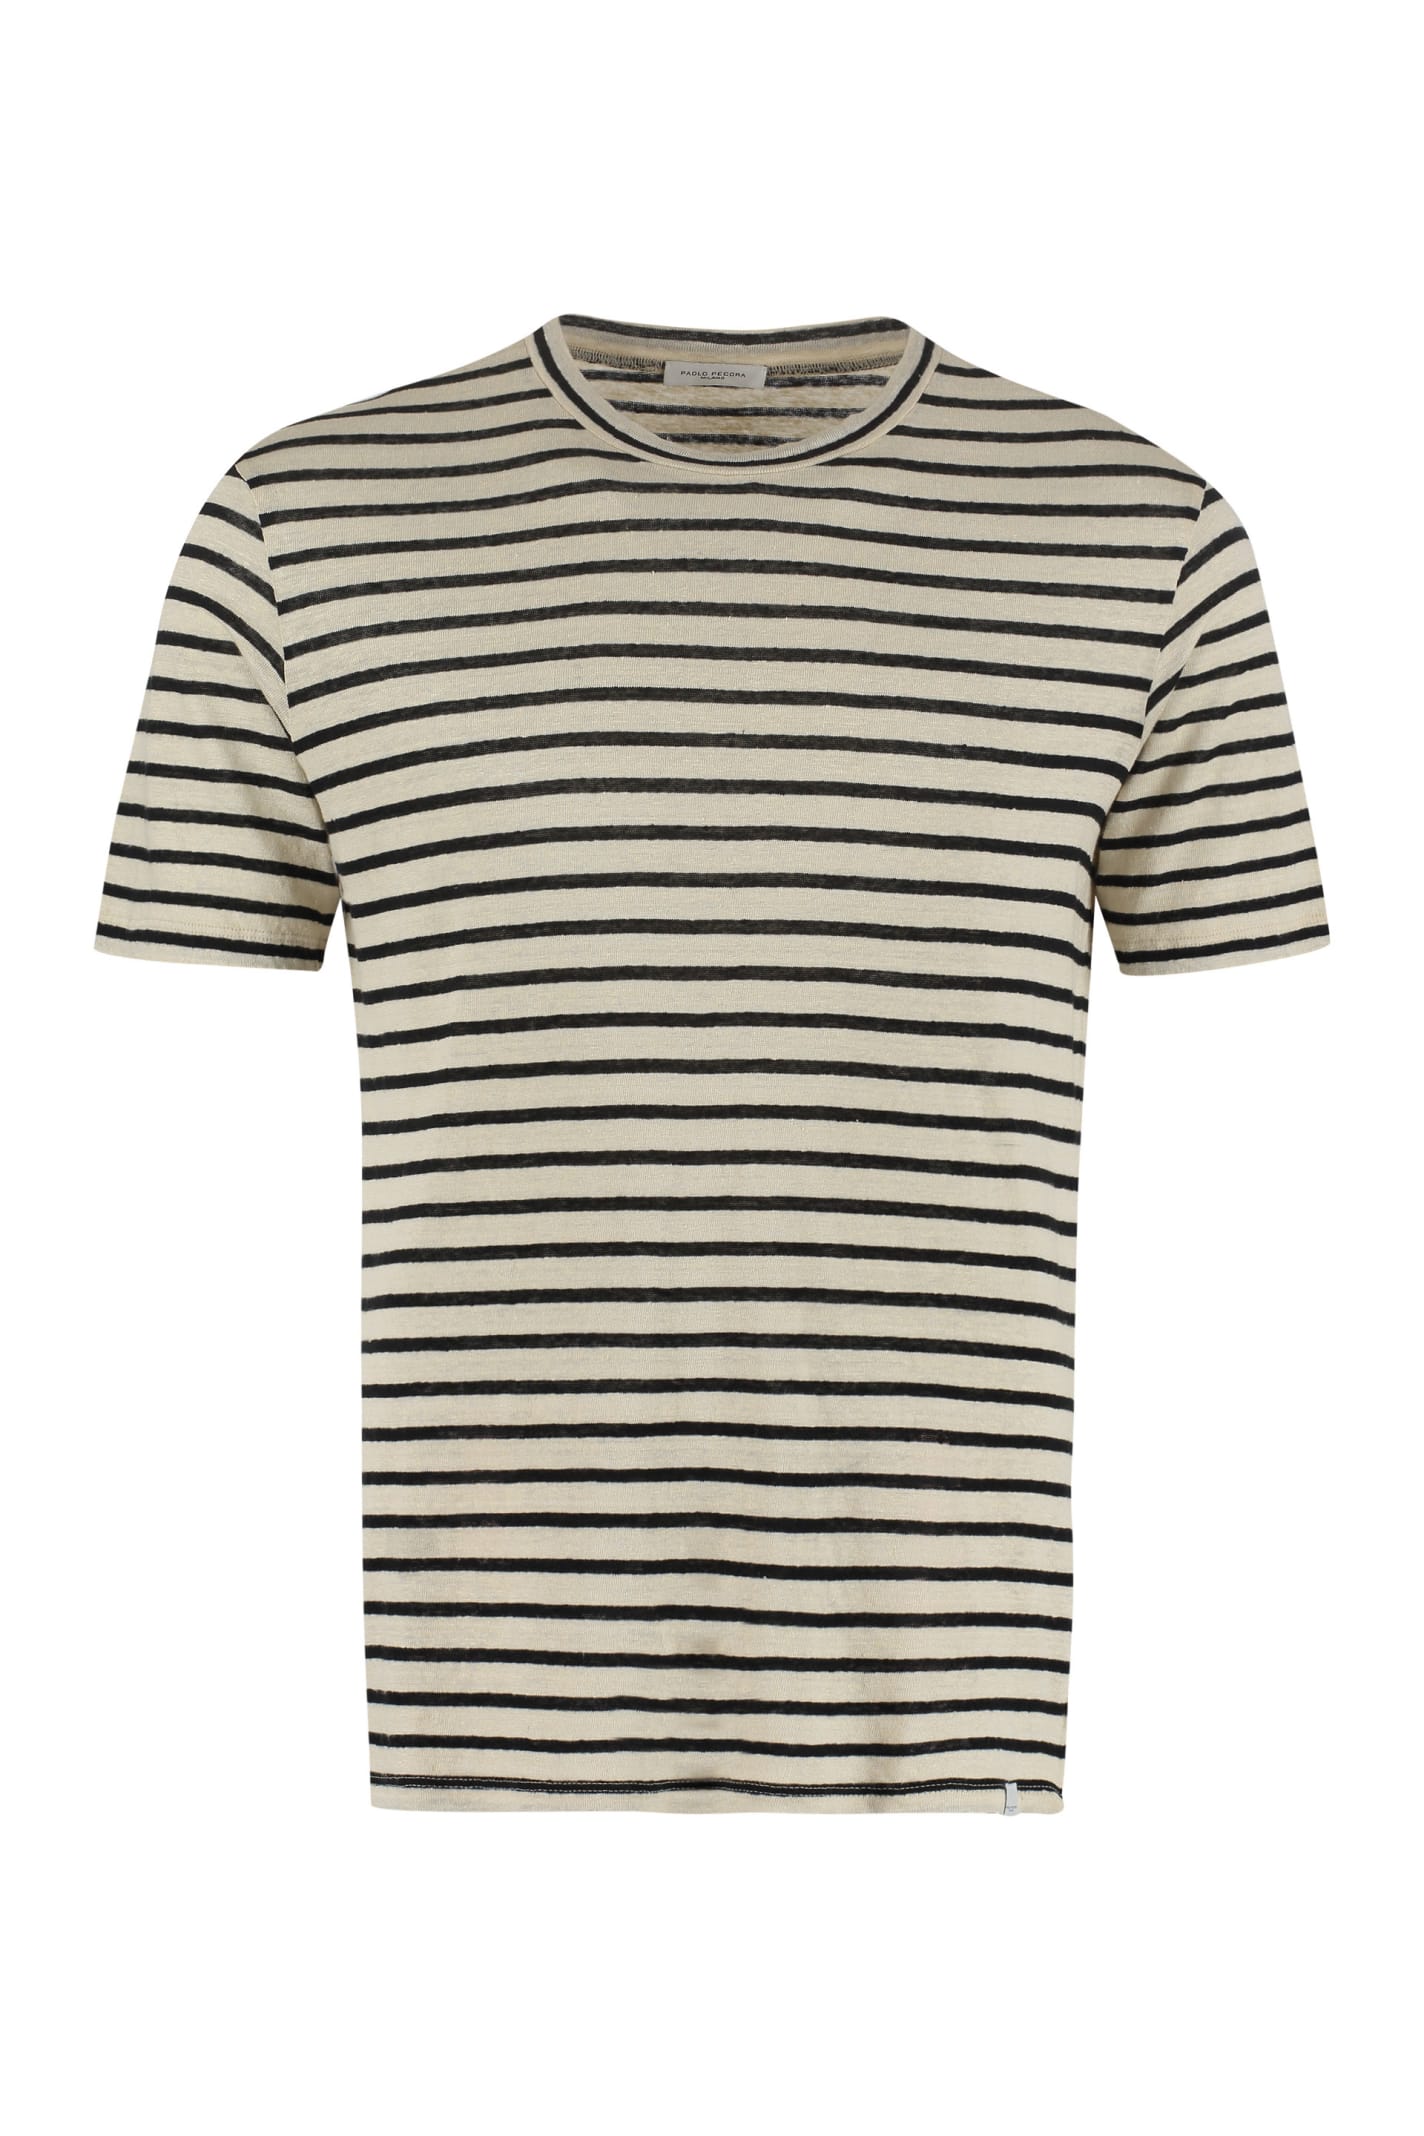 Paolo Pecora Striped Knit T-shirt